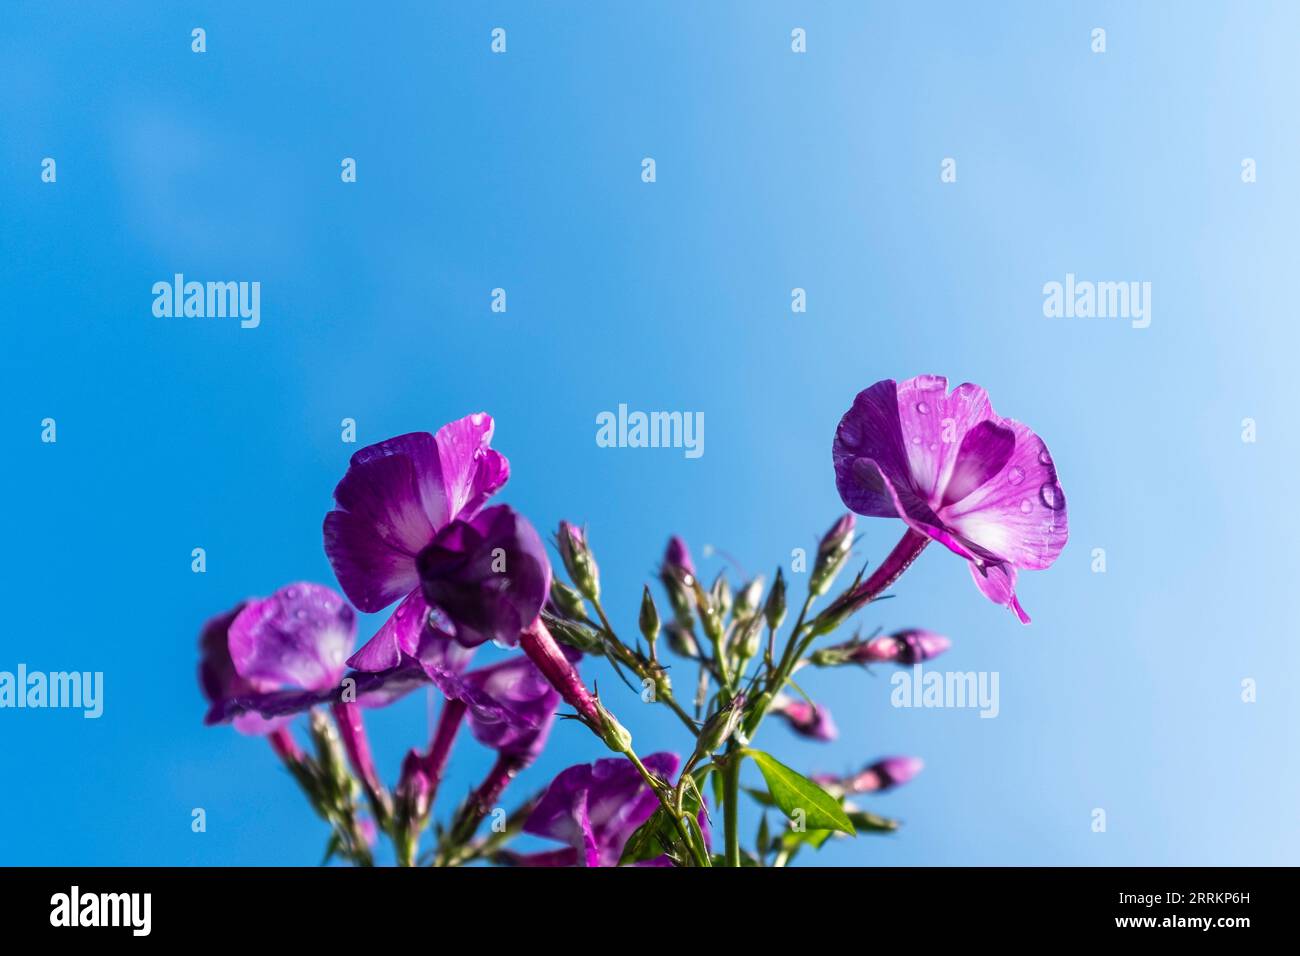 Phlox flower against blue sky Stock Photo